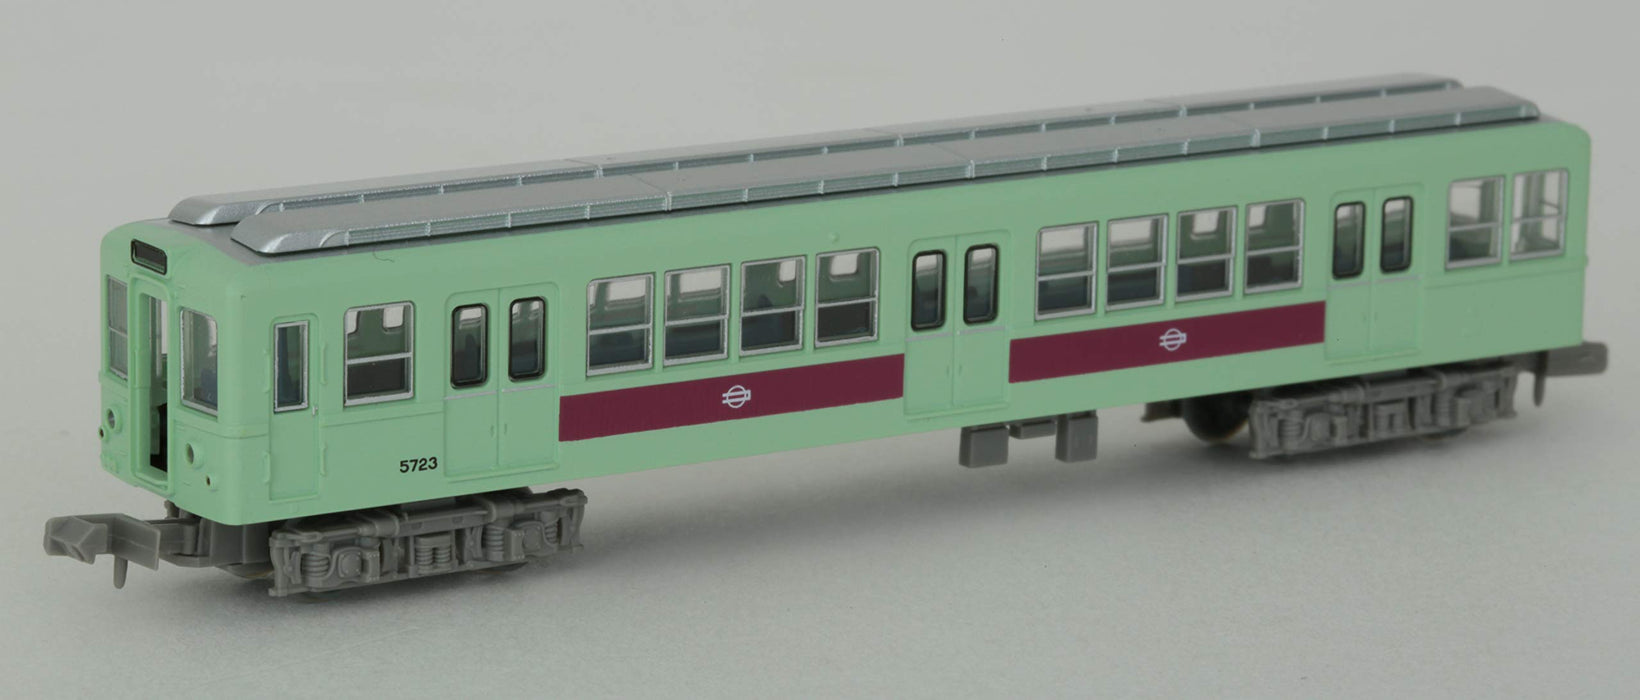 TOMYTEC Osaka Metro Tanimachi Line Series 50 5069 Configuration 6 Cars Set A N Scale